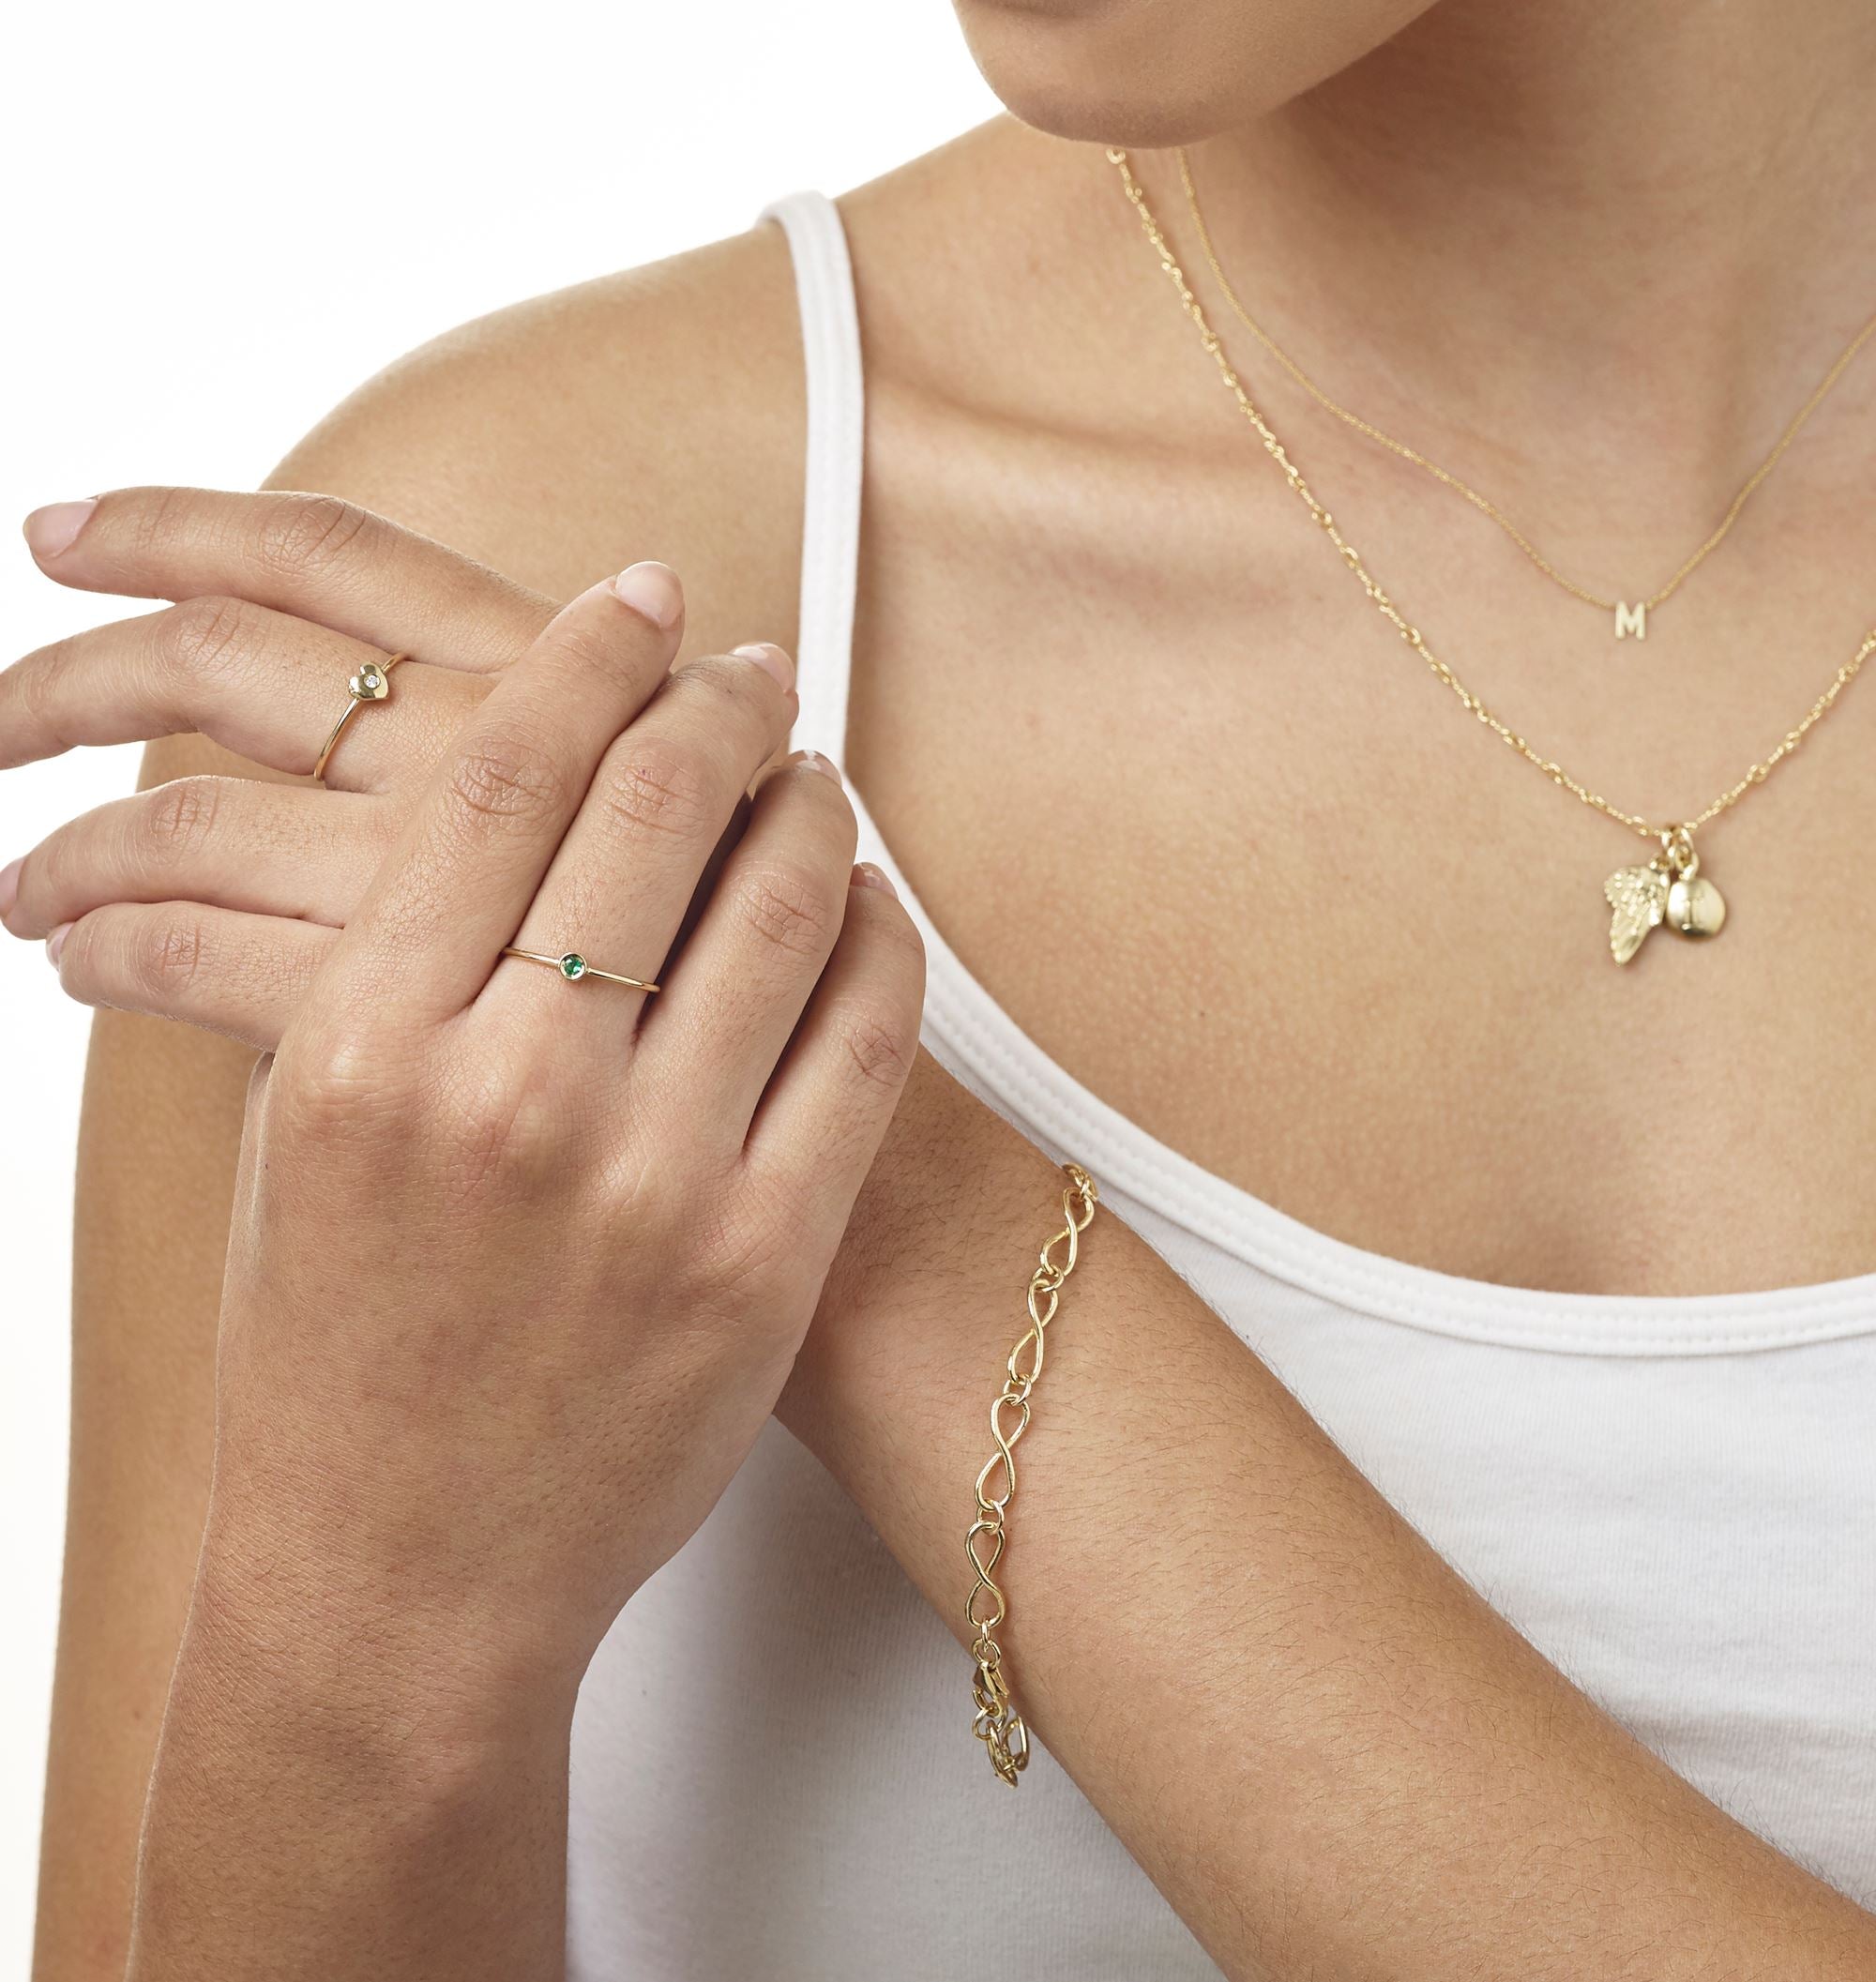 Gorjana Women's Heart Mini Necklace